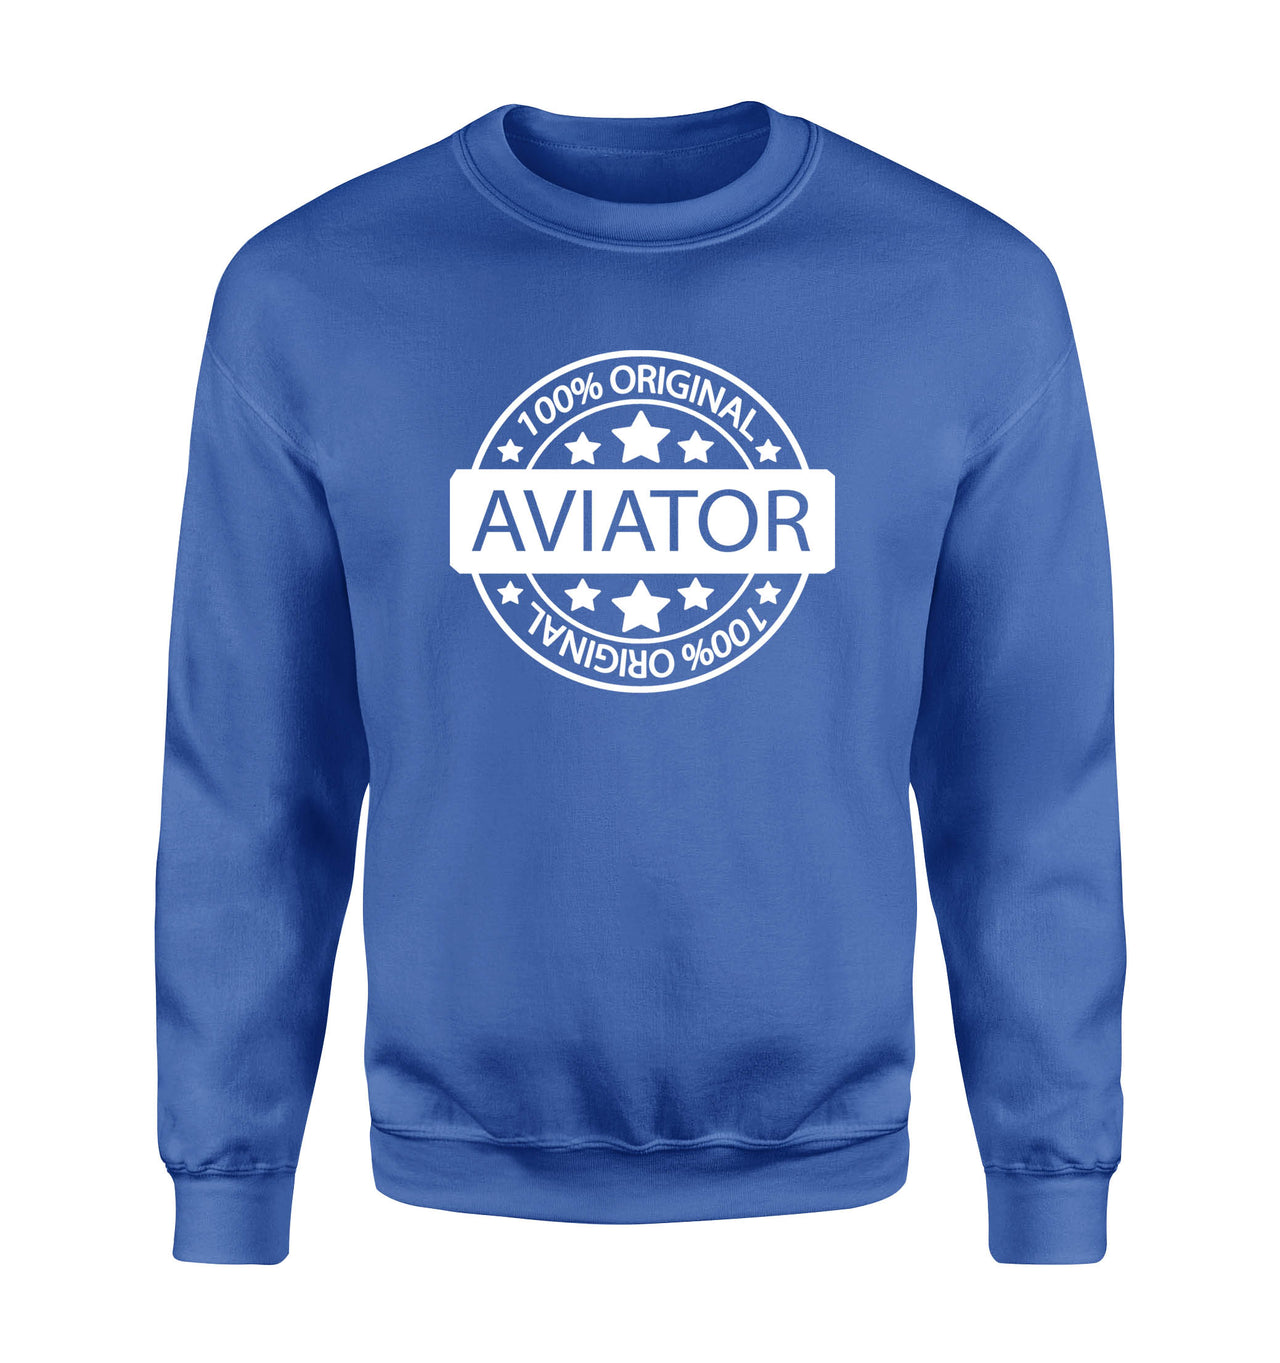 %100 Original Aviator Designed Sweatshirts